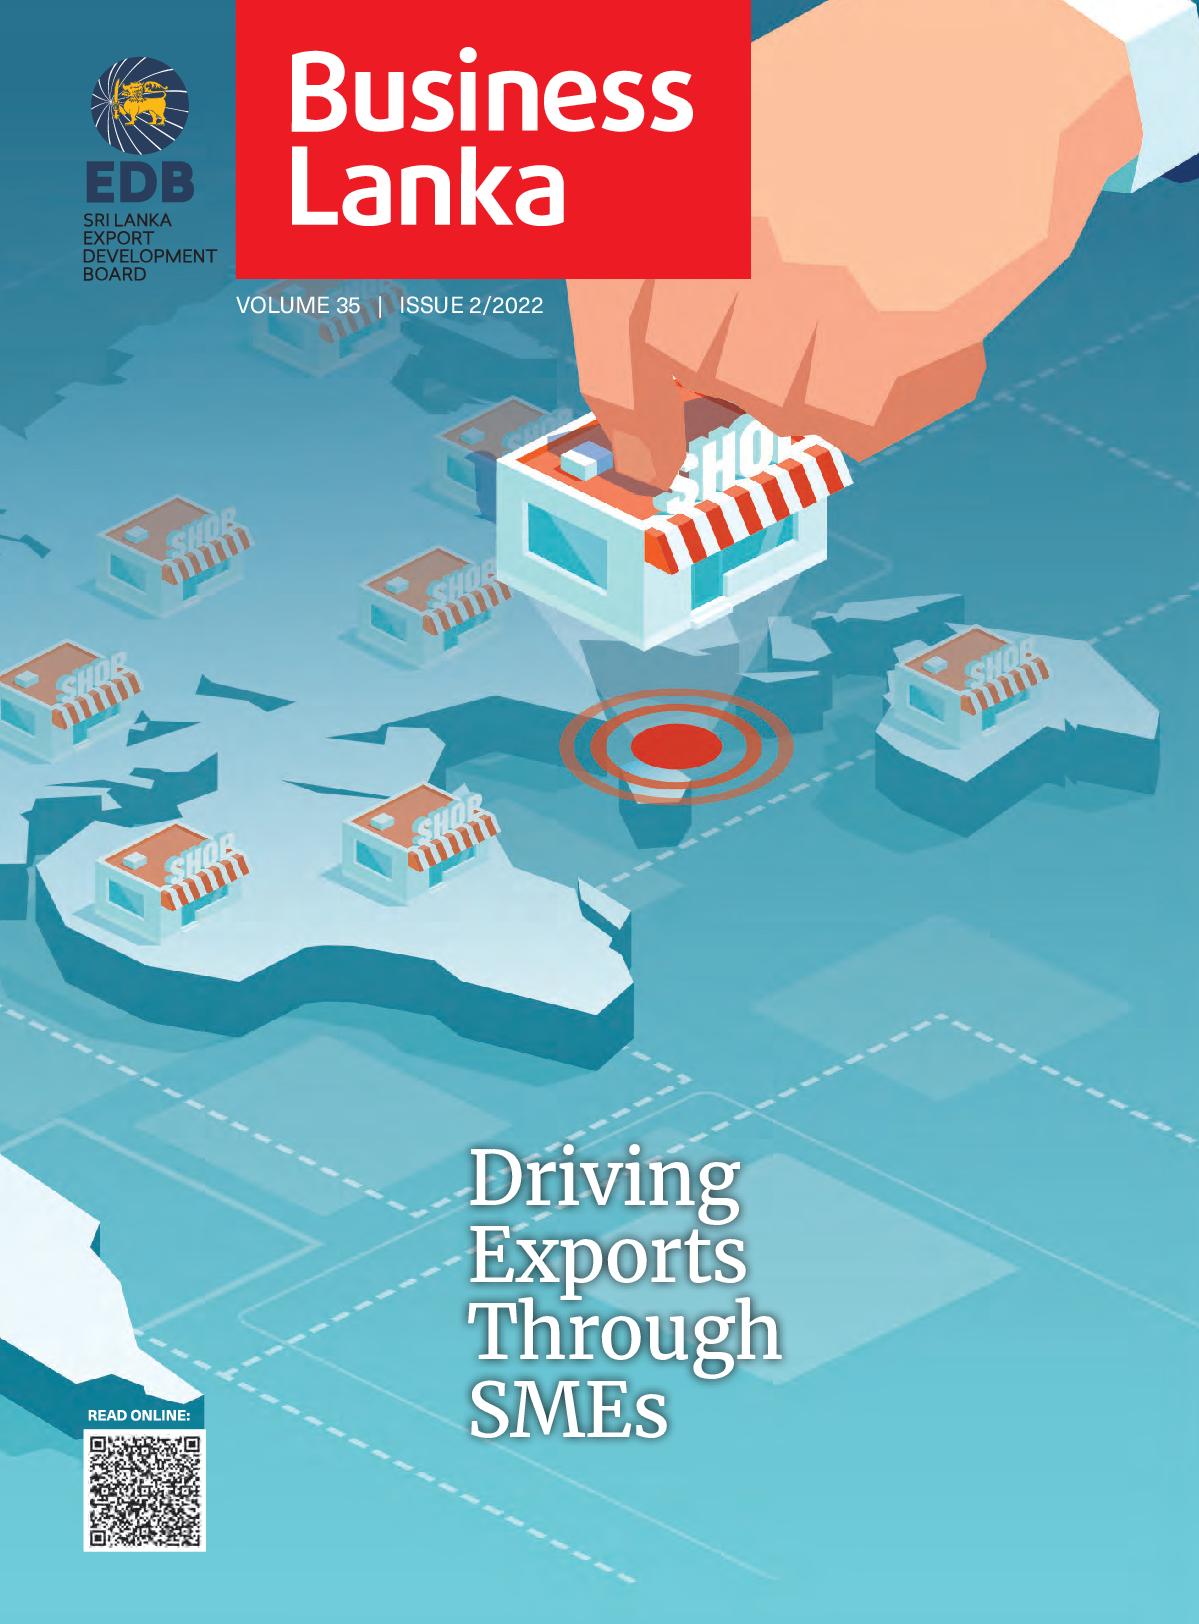 Business Lanka Magazine: Driving Exports Through SMEs